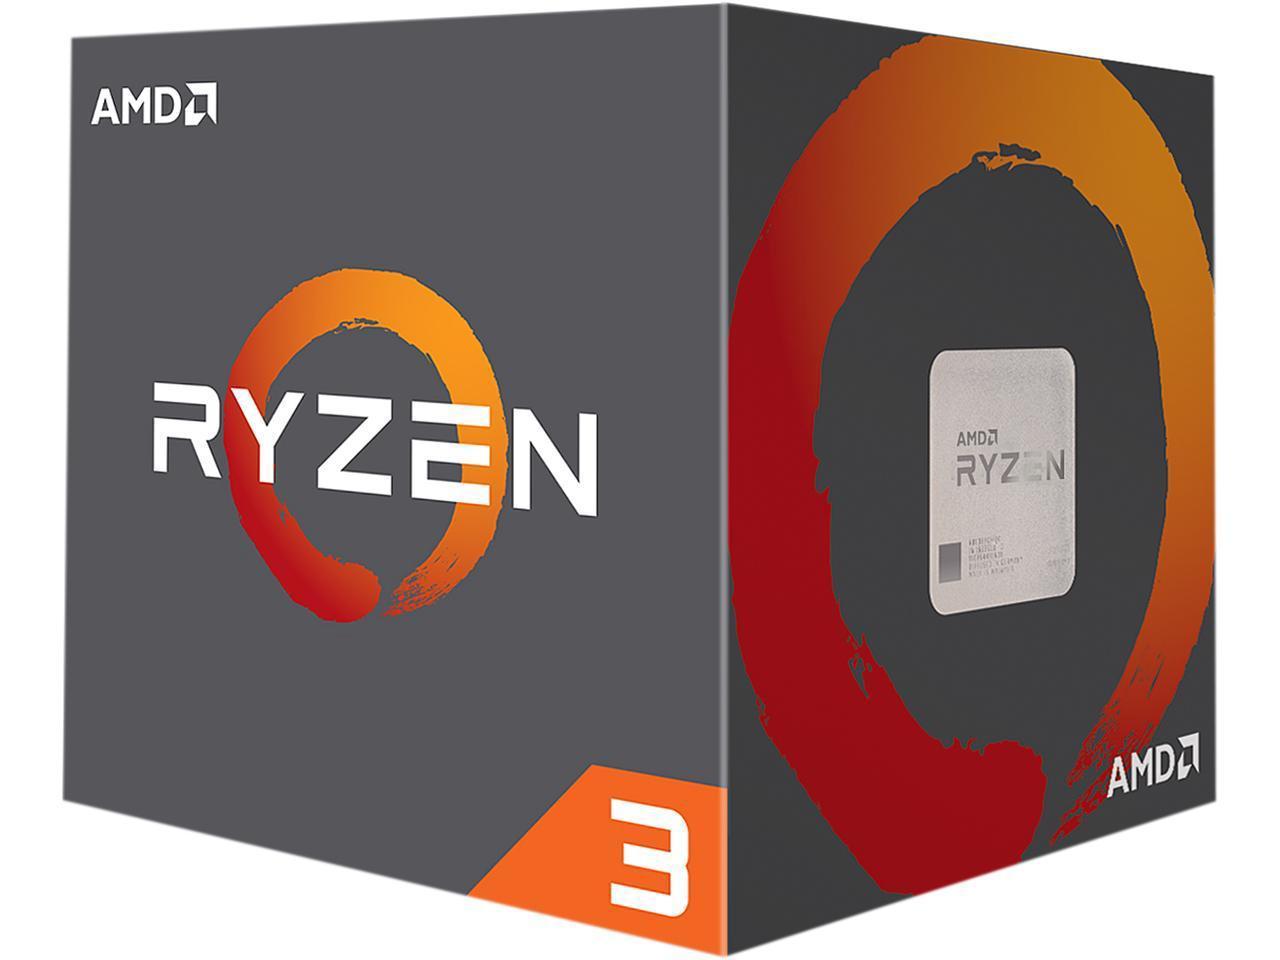 CPU: AMD Ryzen 3 1200